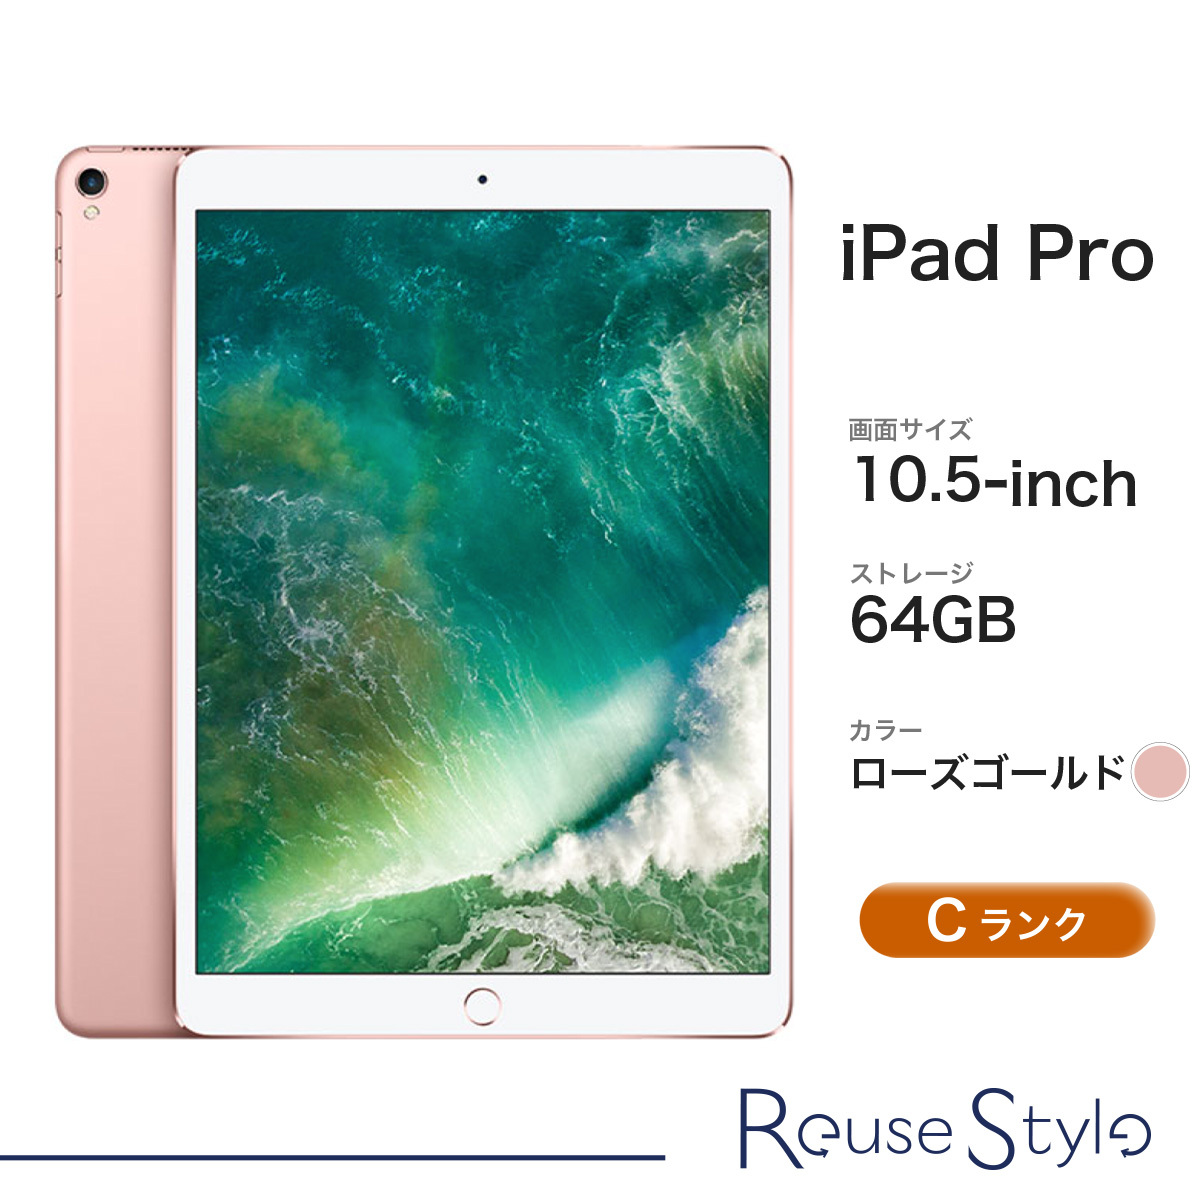 iPadpro 10.5インチ 64GB WiFiモデル ローズゴールド-